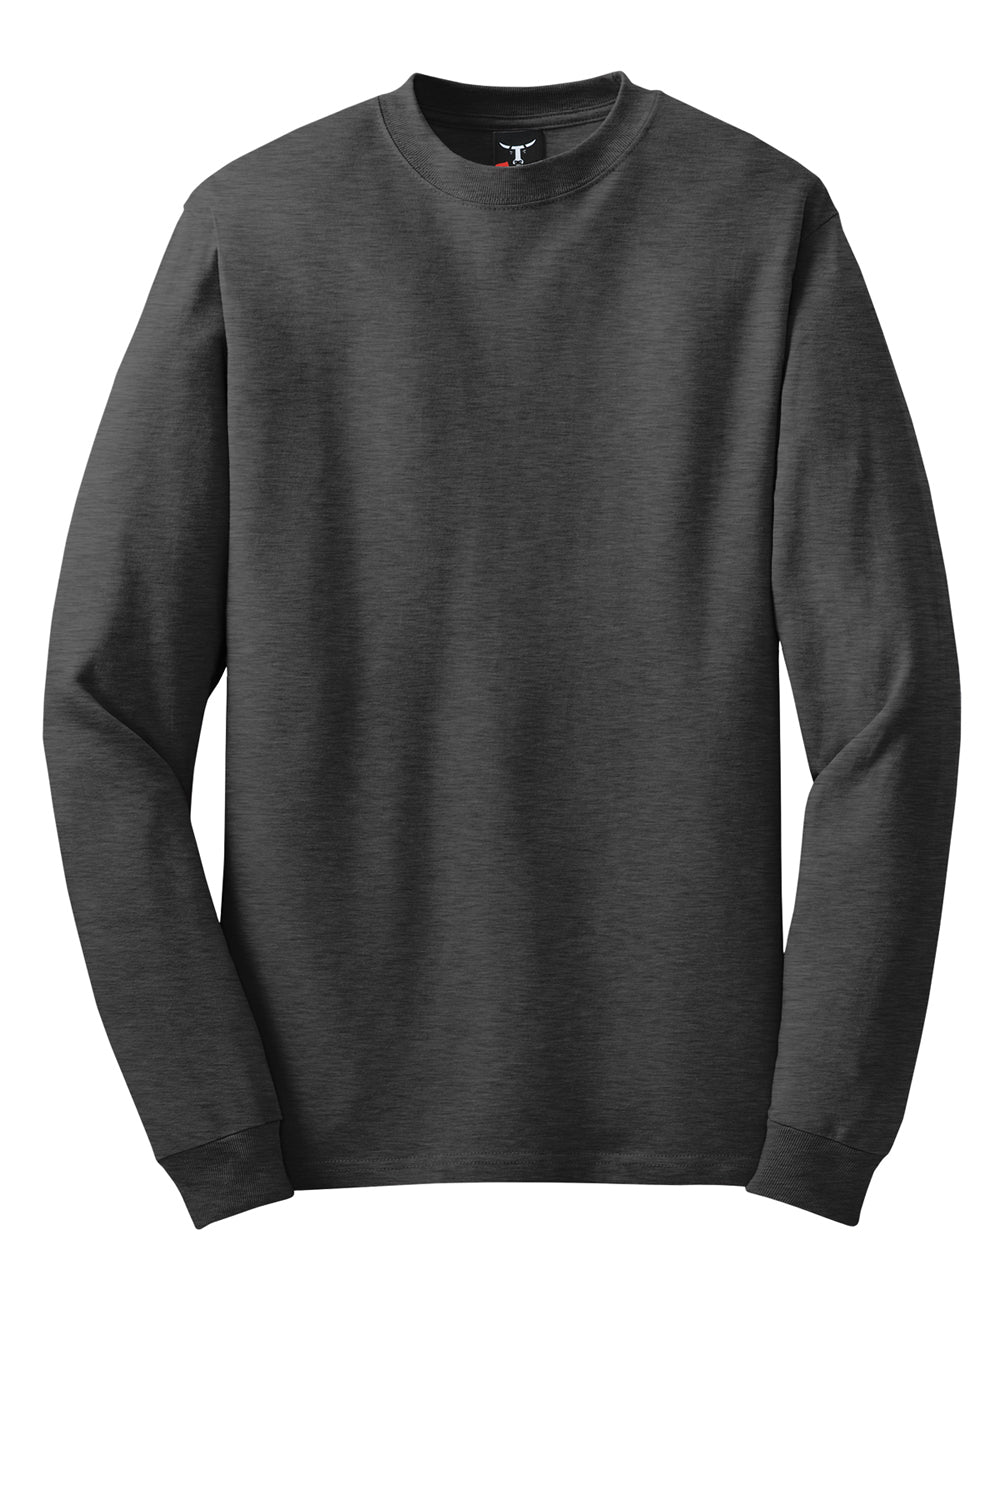 Hanes Mens Beefy-T Long Sleeve Crewneck T-Shirt Heather Charcoal Grey Flat Front